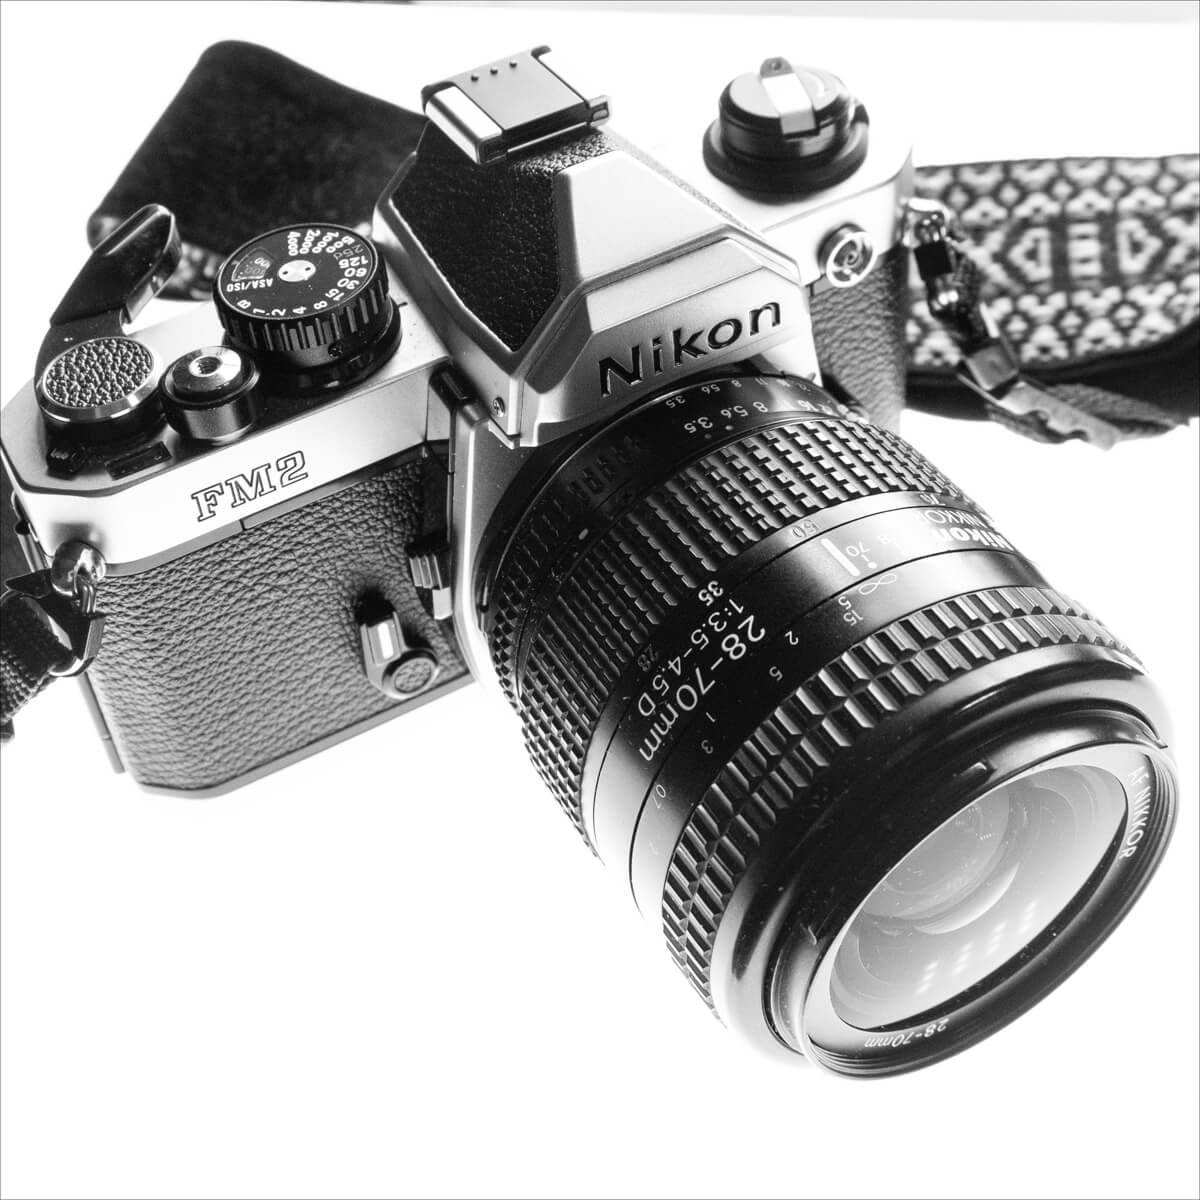 MY Nikon FM2n and Nikkor AF 28-70mm f:3.5-4.5D, David Whenham